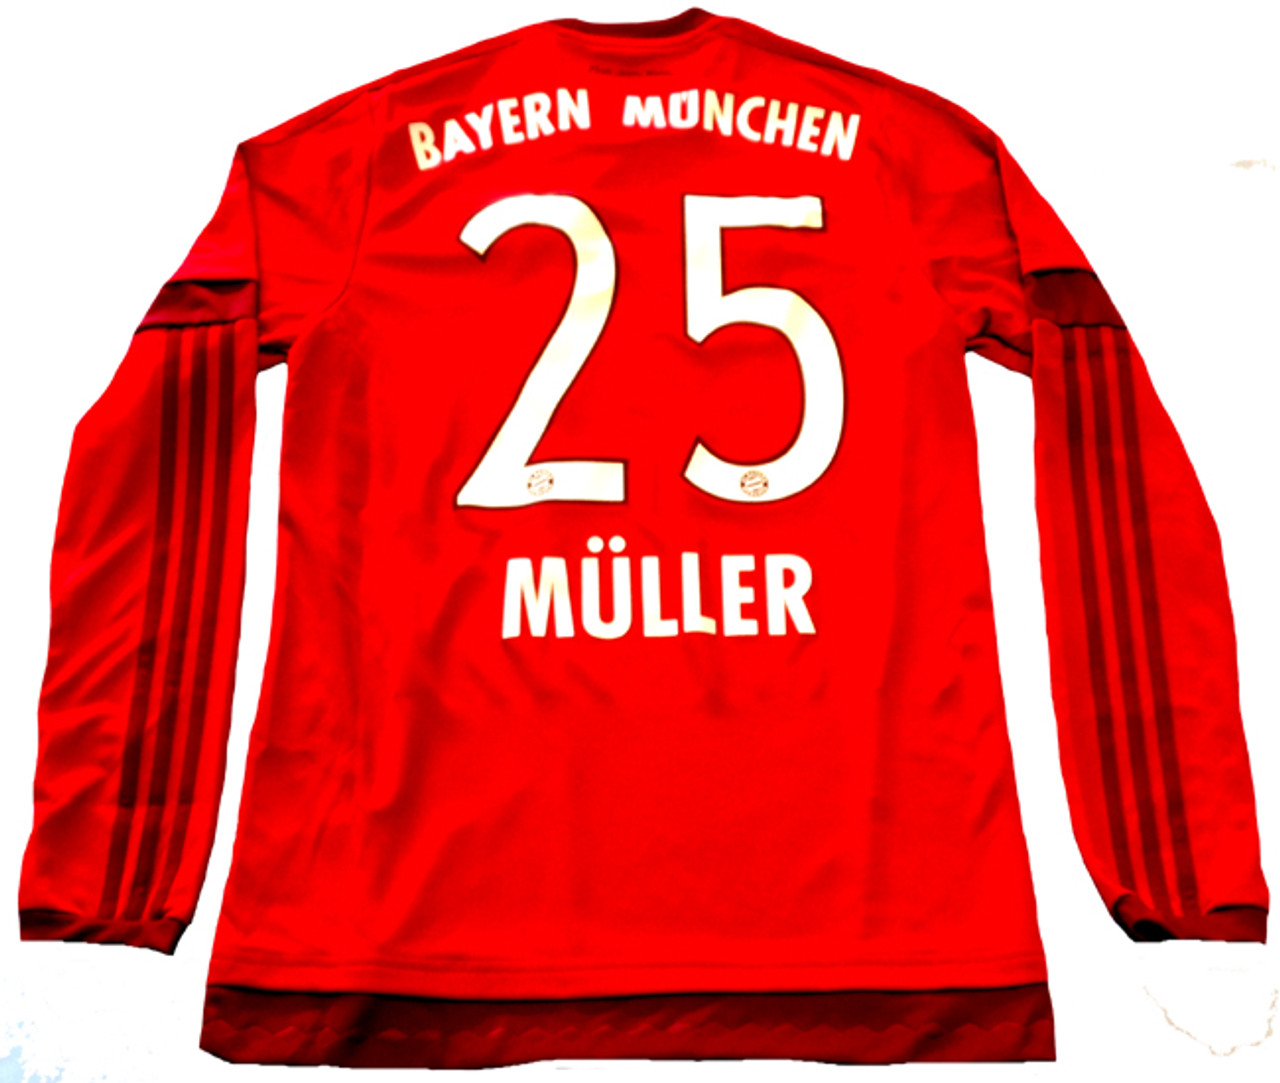 Men's Replica Adidas Bayern Munich Long Sleeve Home Jersey 23/24 - Size L